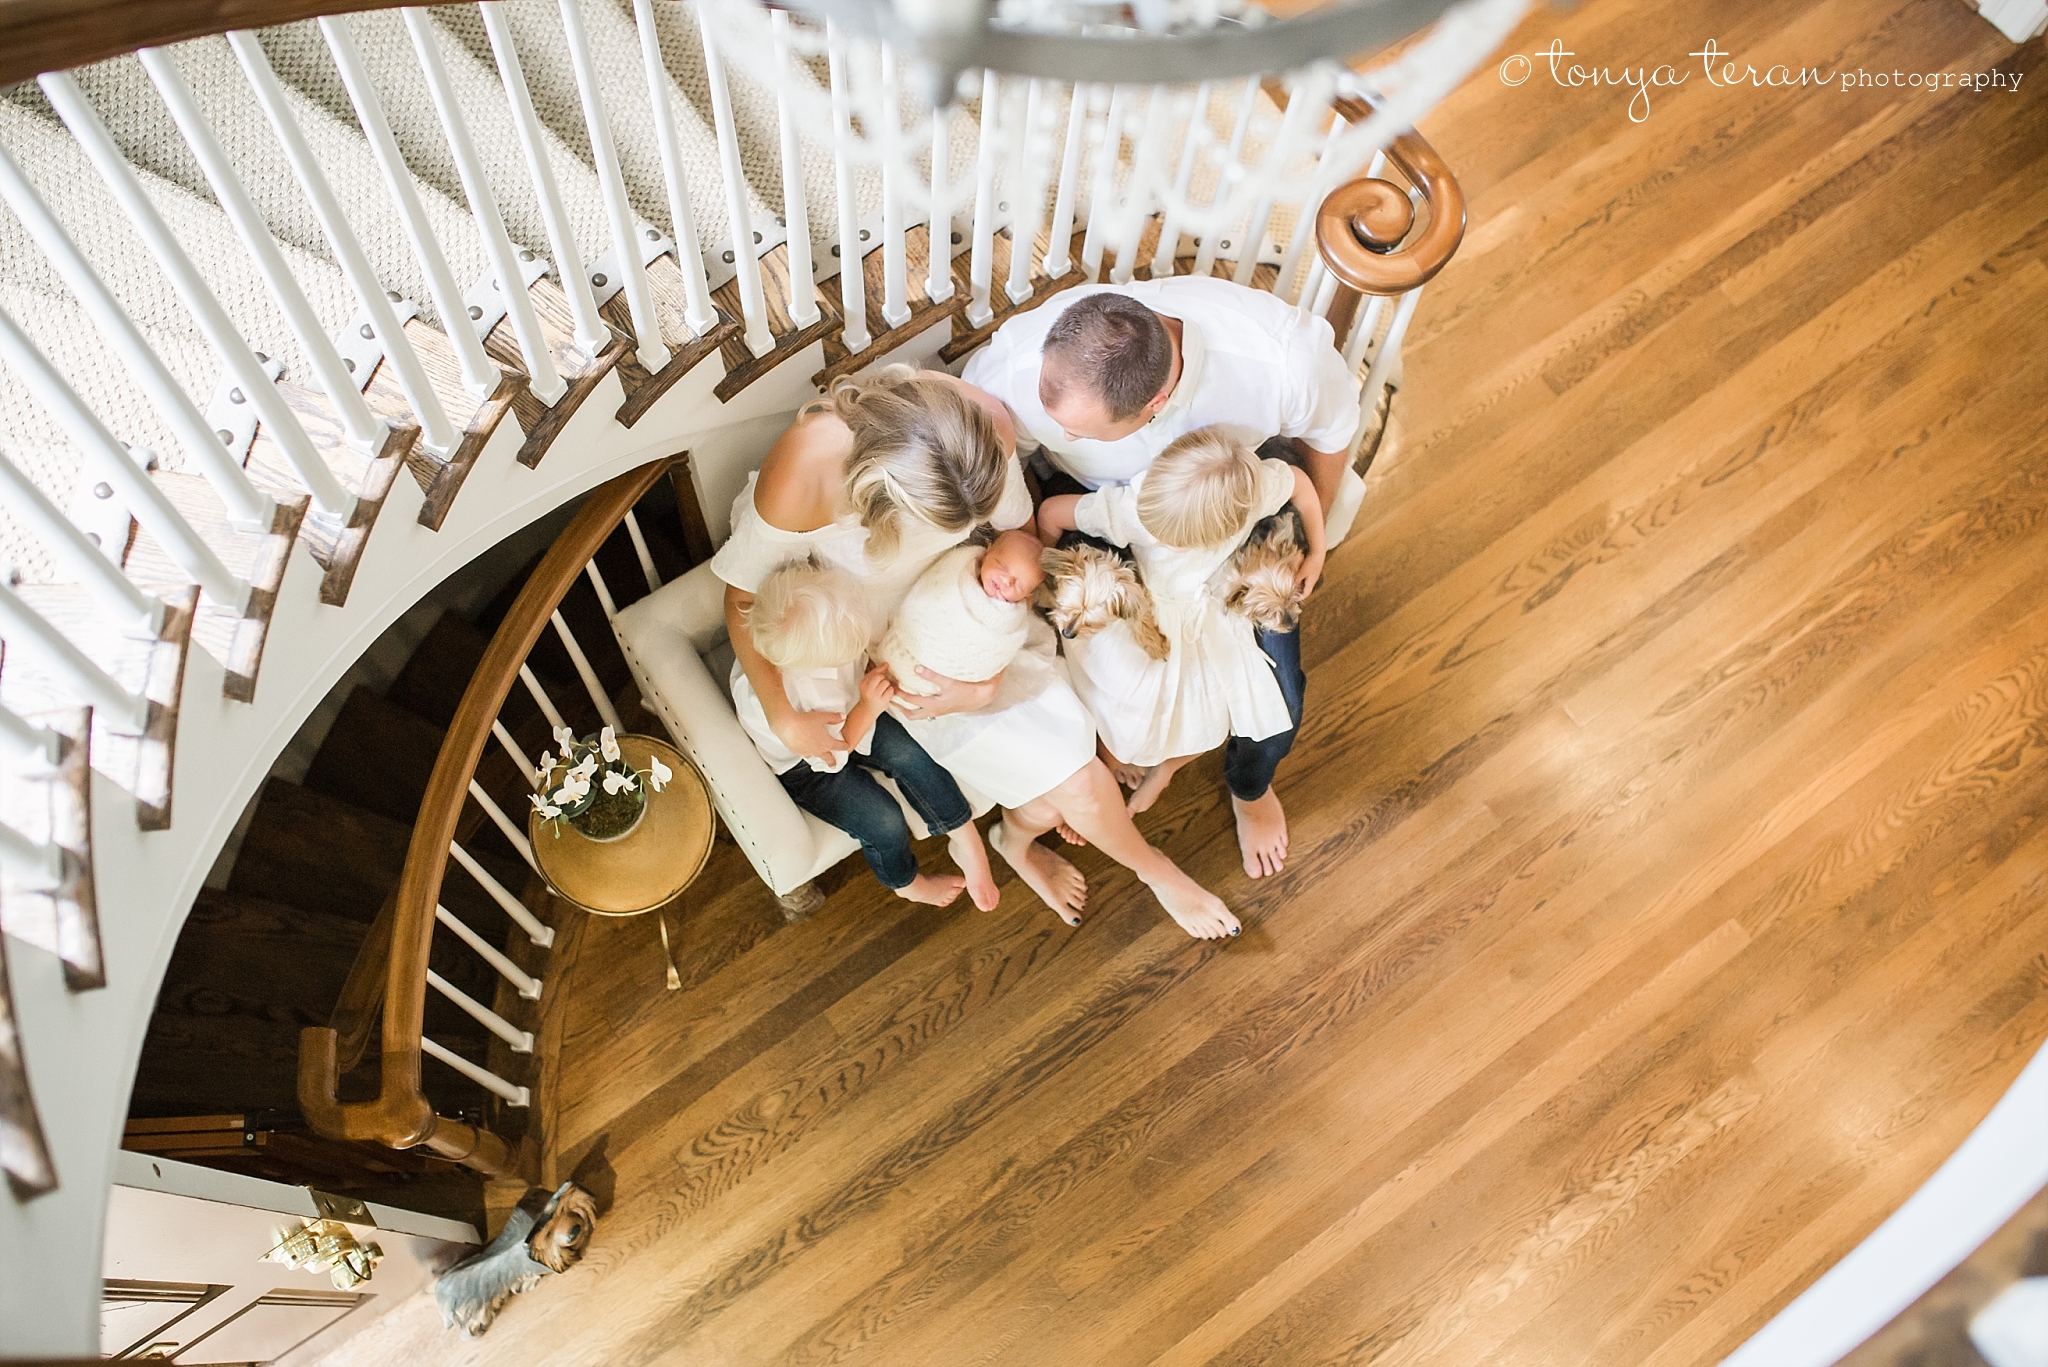 In-home Lifestyle Newborn Family Photo Session | Tonya Teran Photography, Washington, DC Newborn, Baby, and Family Photographer